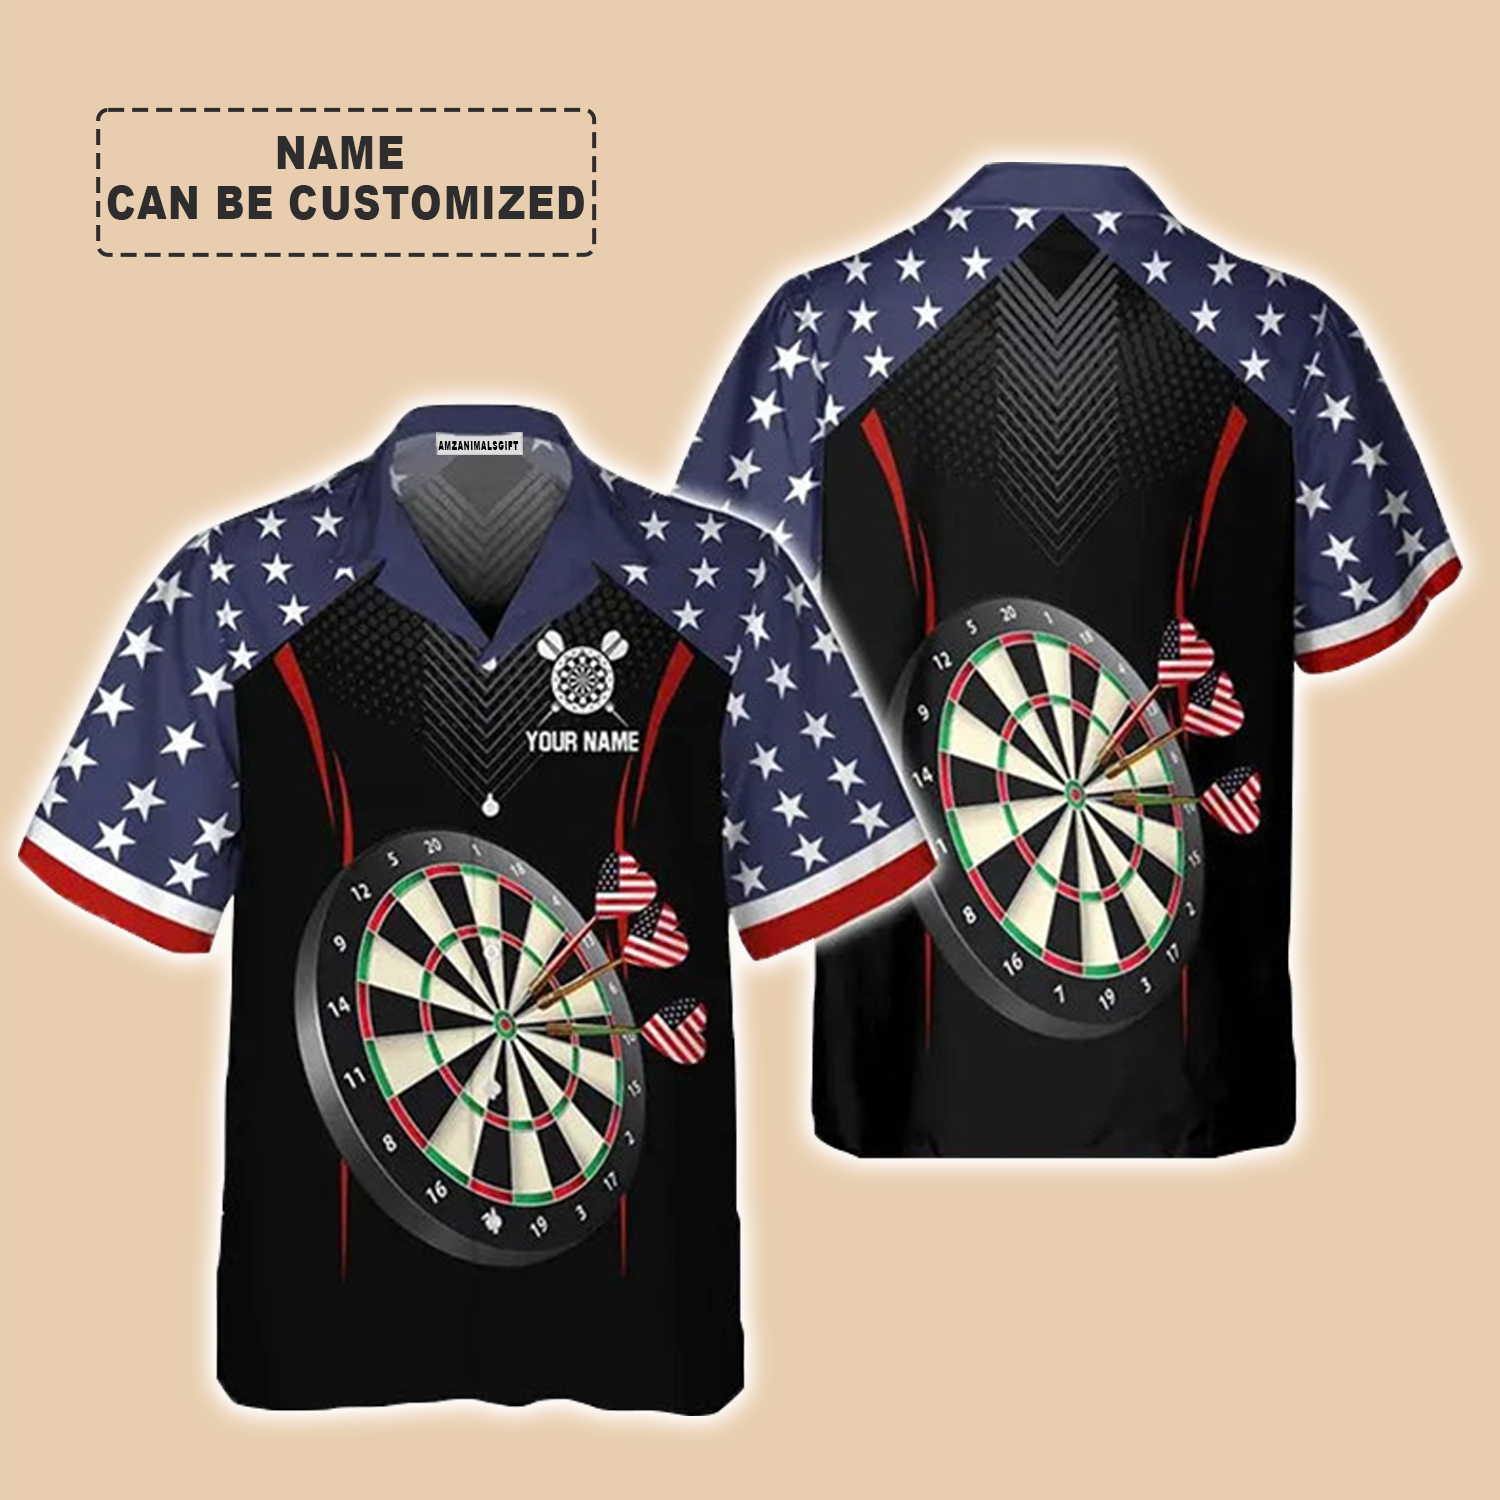 Customized Darts Hawaiian Shirt, USA Darts, Personalized Name Hawaiian Shirt For Men - Perfect Gift For Darts Lovers, Darts Players